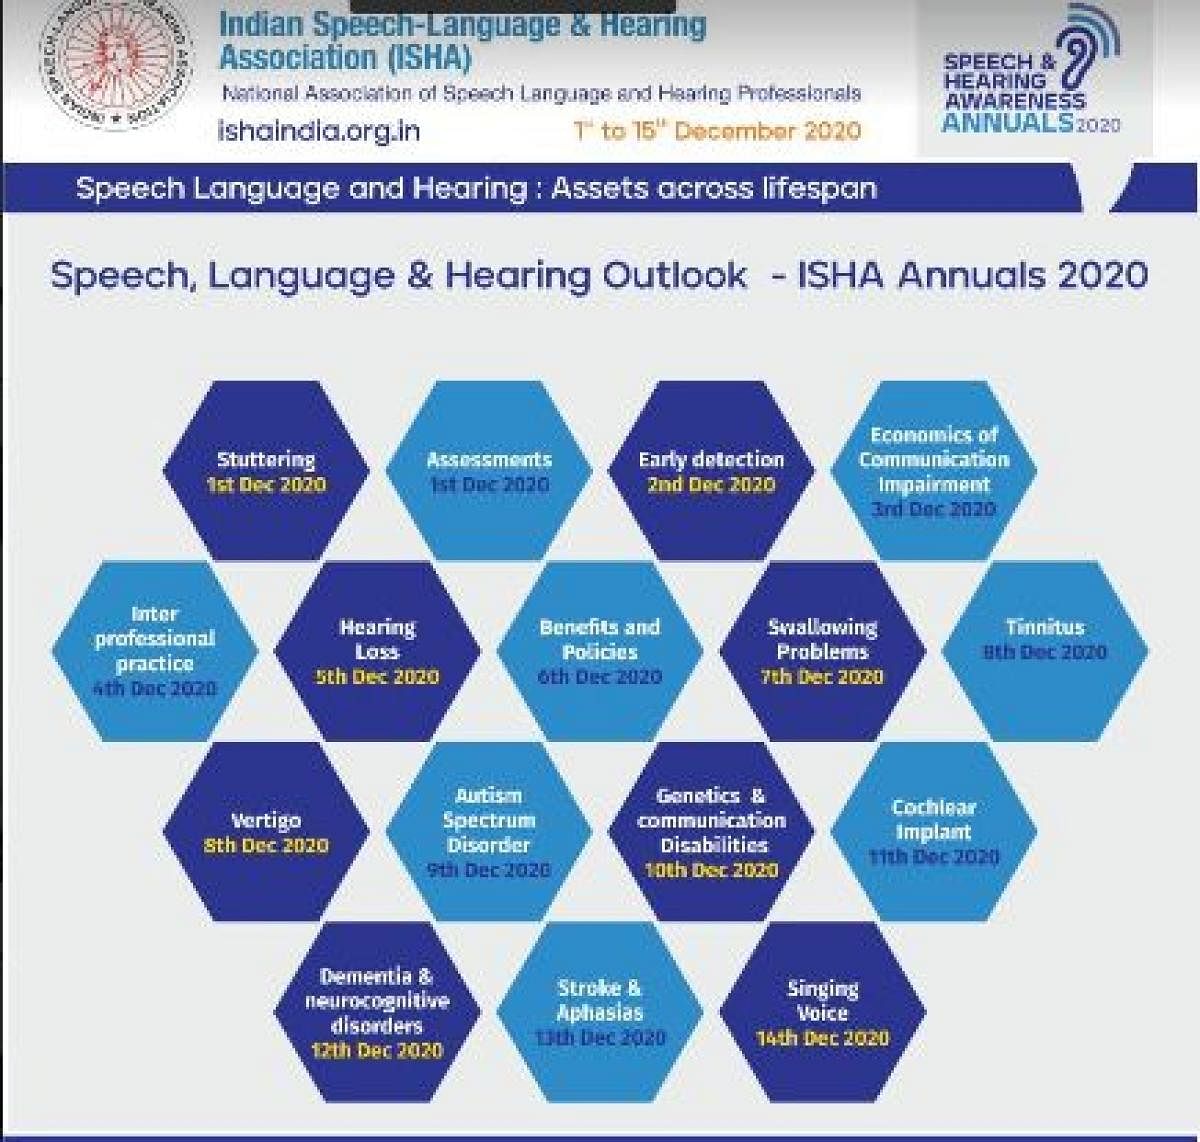 ISHA to observe speech, hearing awareness annuals